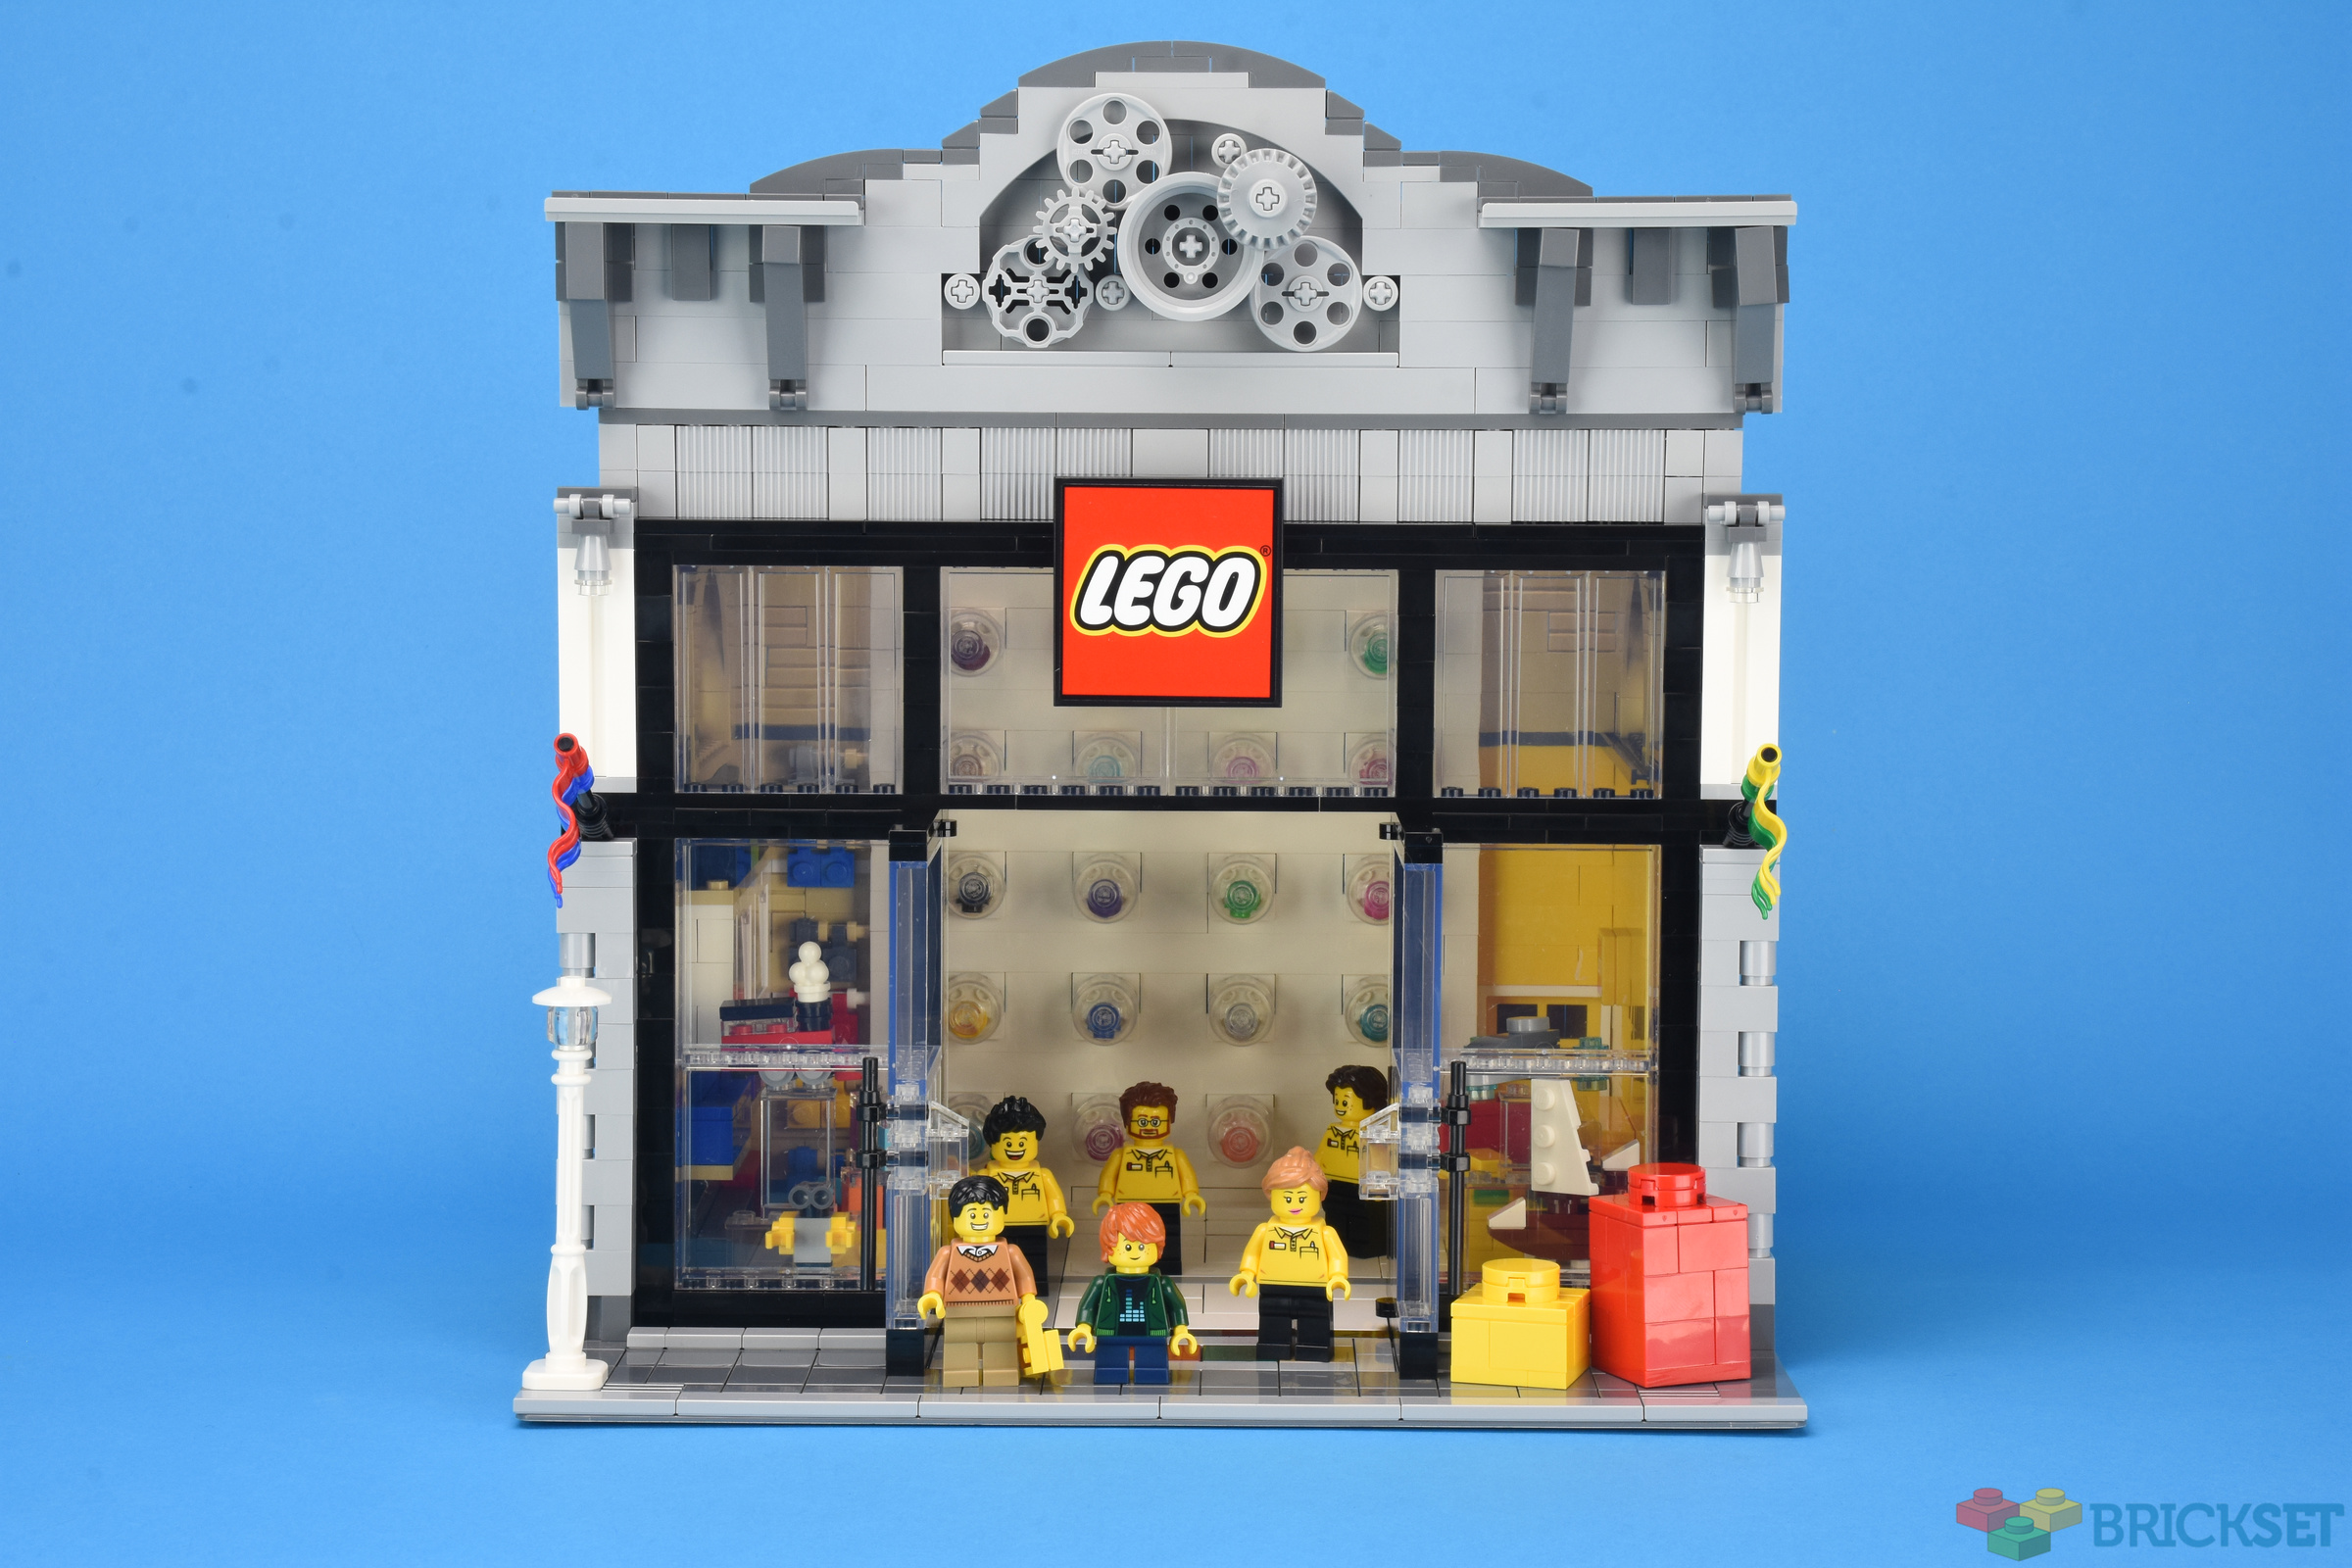 LEGO 910009 Modular LEGO Store review |